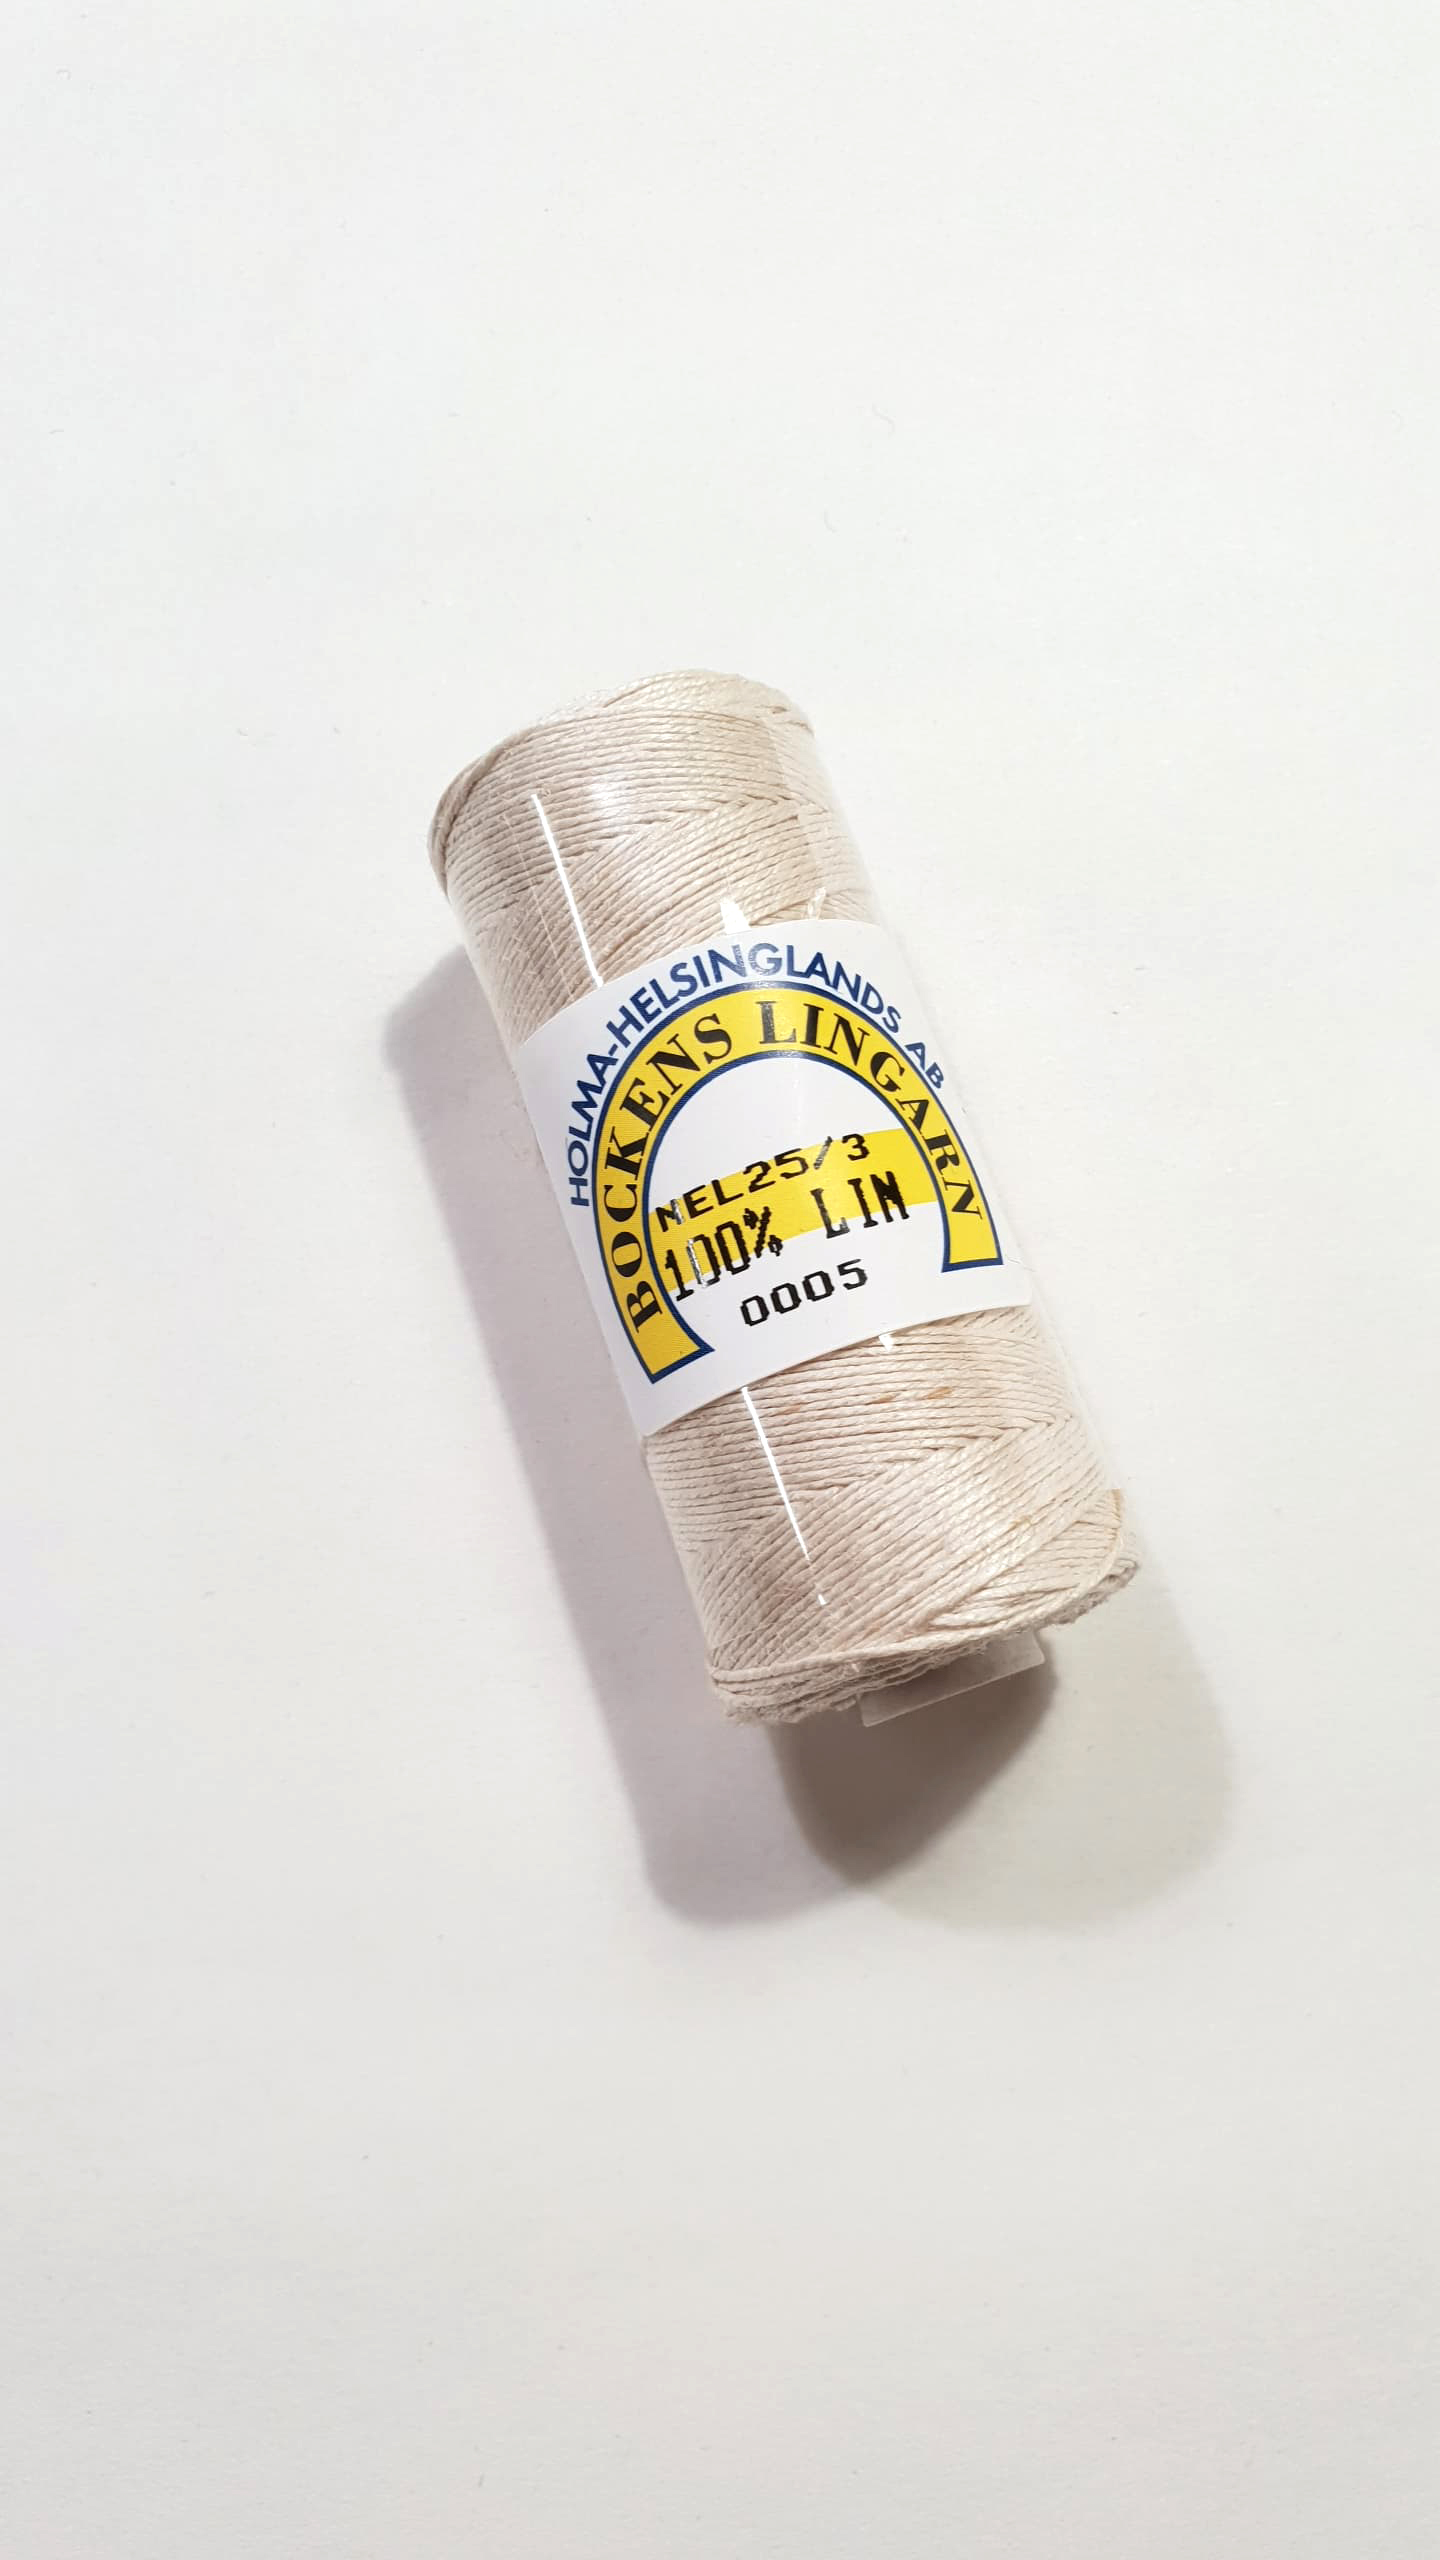 Swedish linen thread 25/3- 1/4 bleached